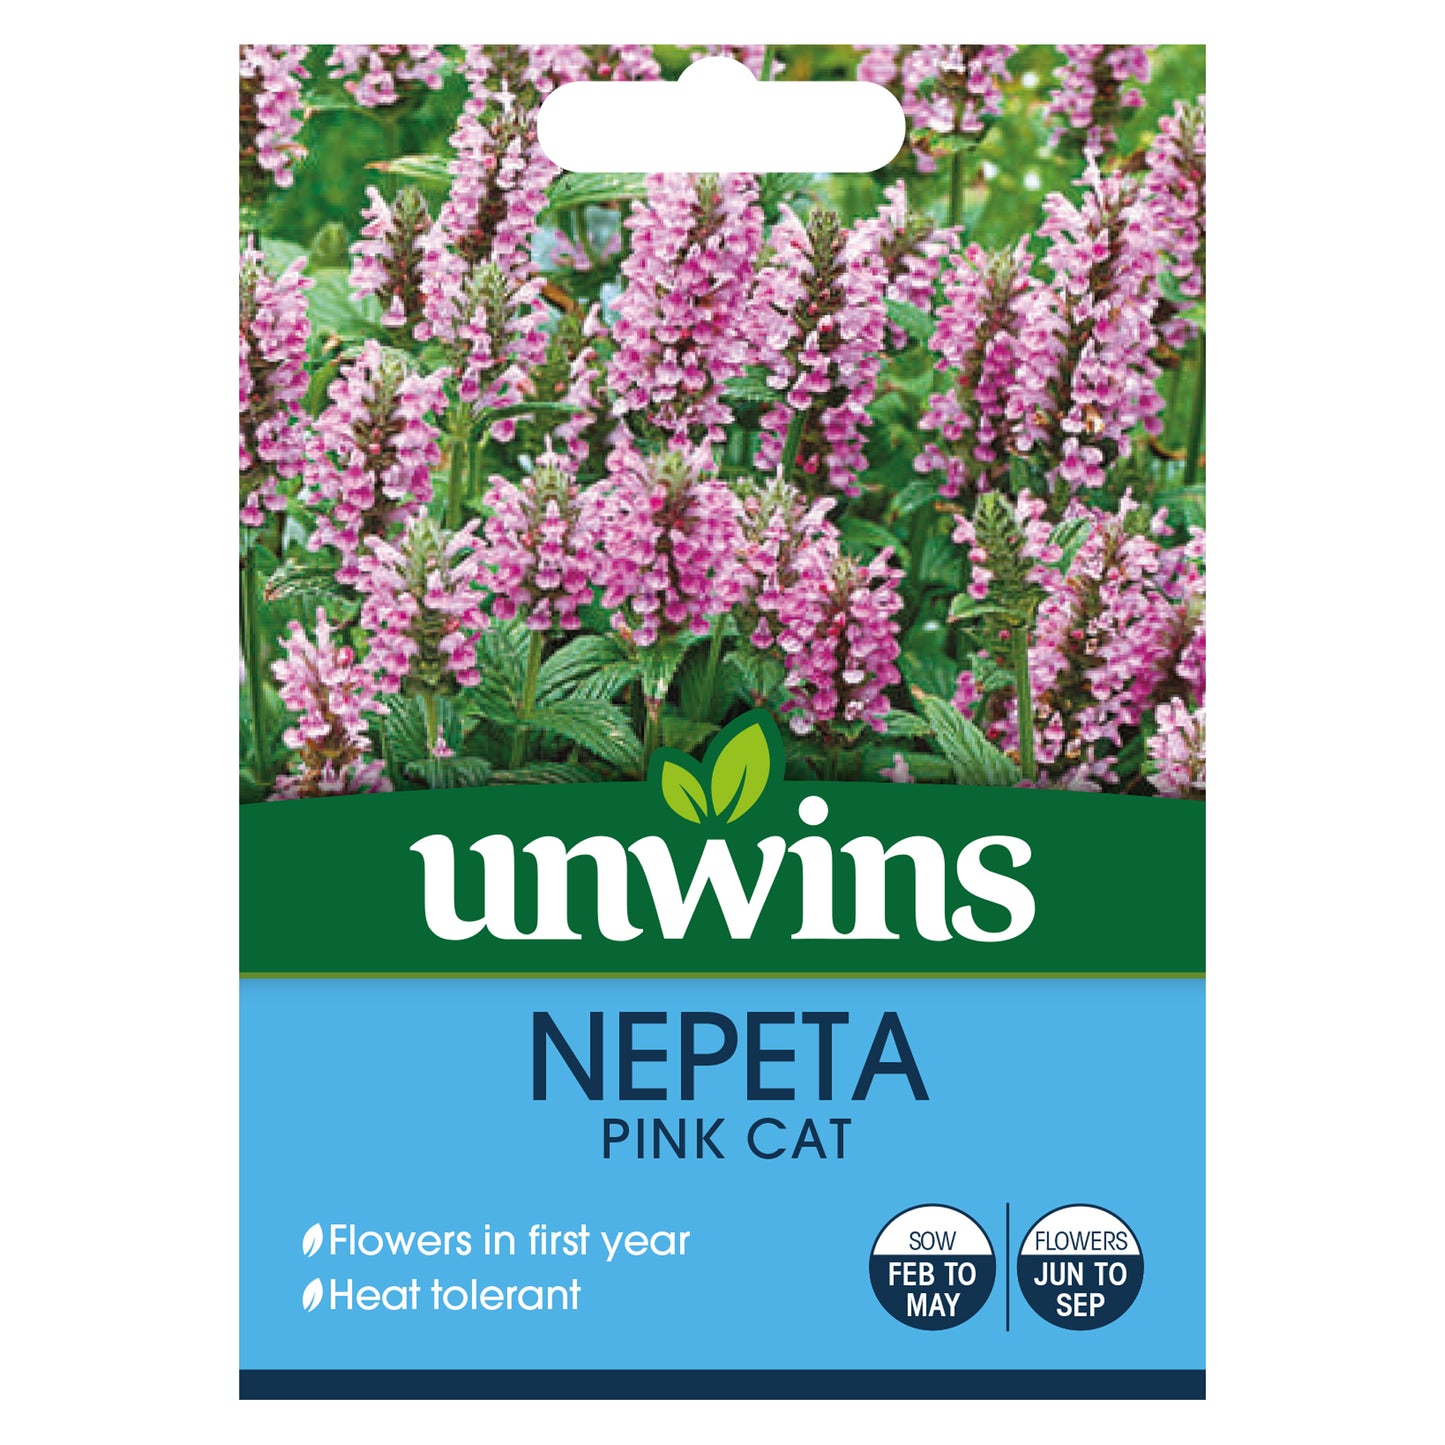 Unwins Nepeta Pink Cat Seeds front